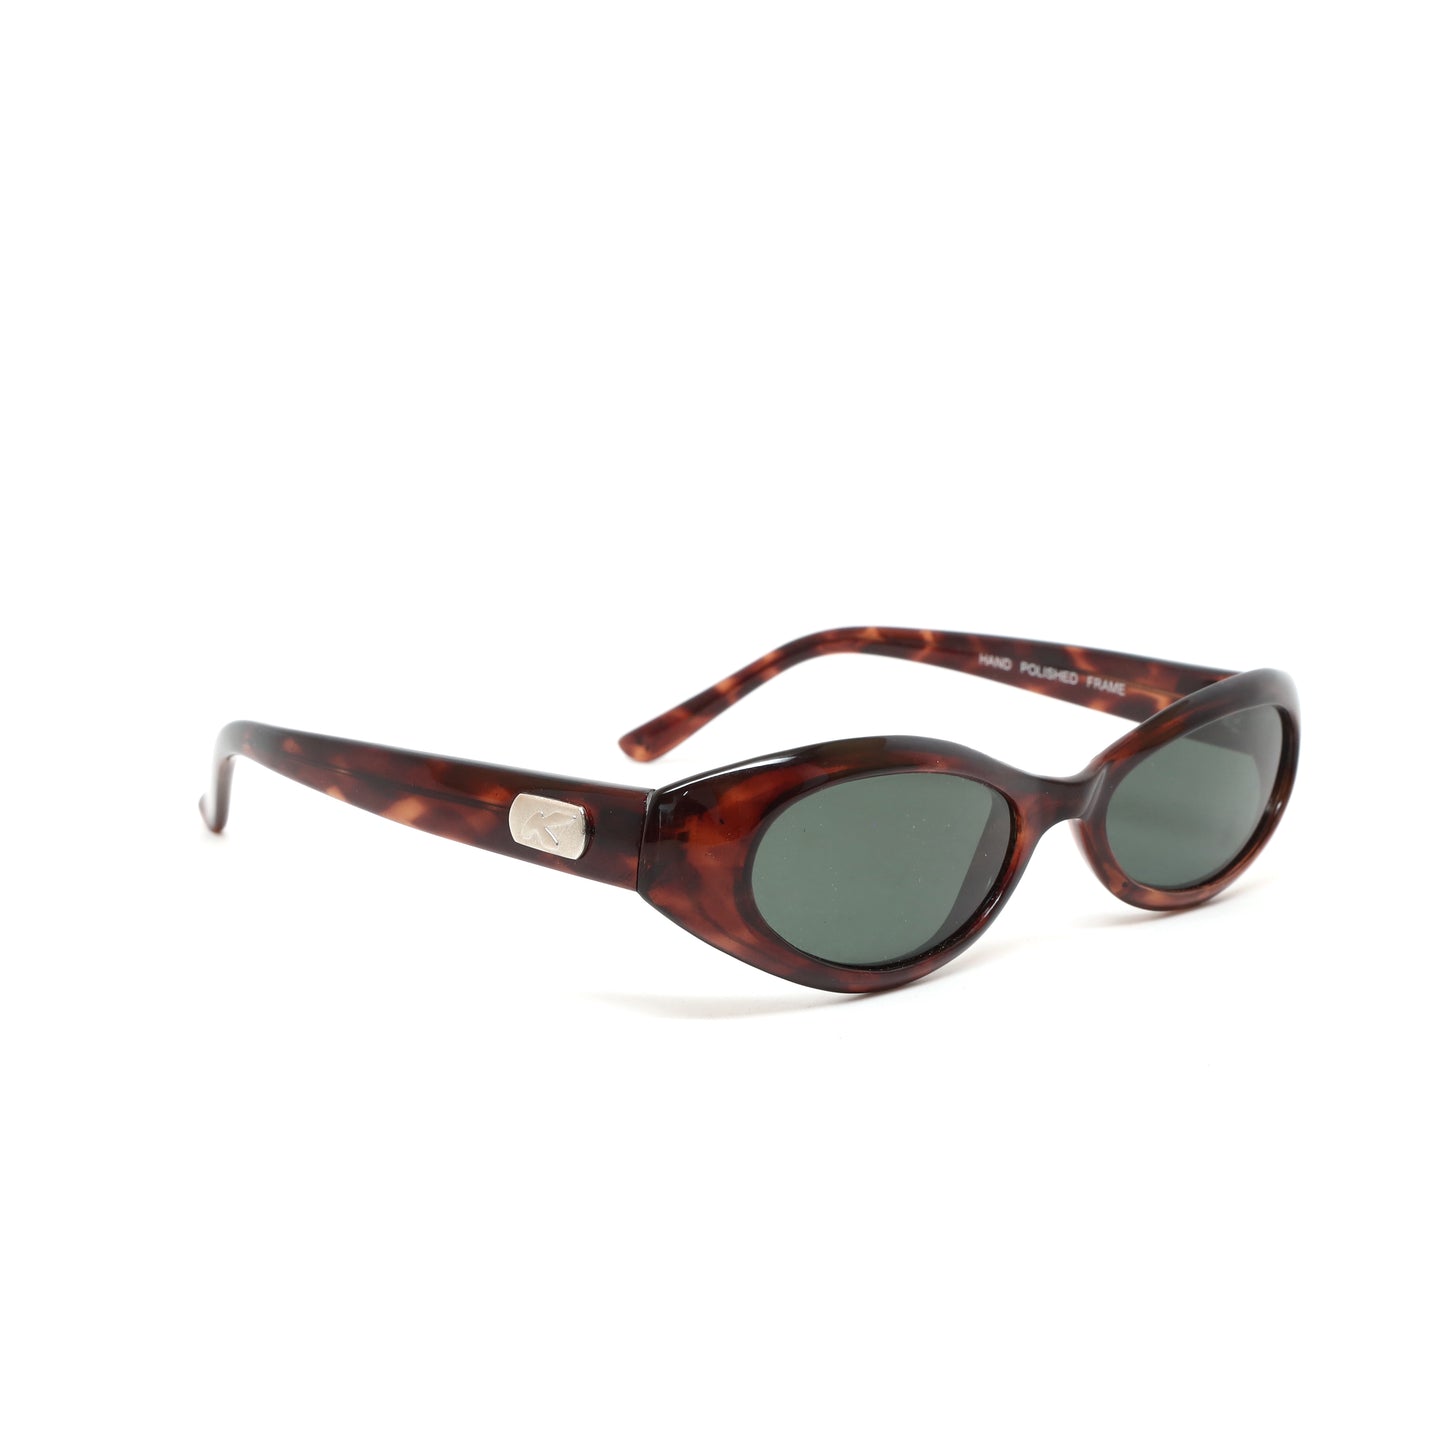 Vintage Small Size 90s Mod Verona Classic Oval Frame Sunglasses - Tortoise